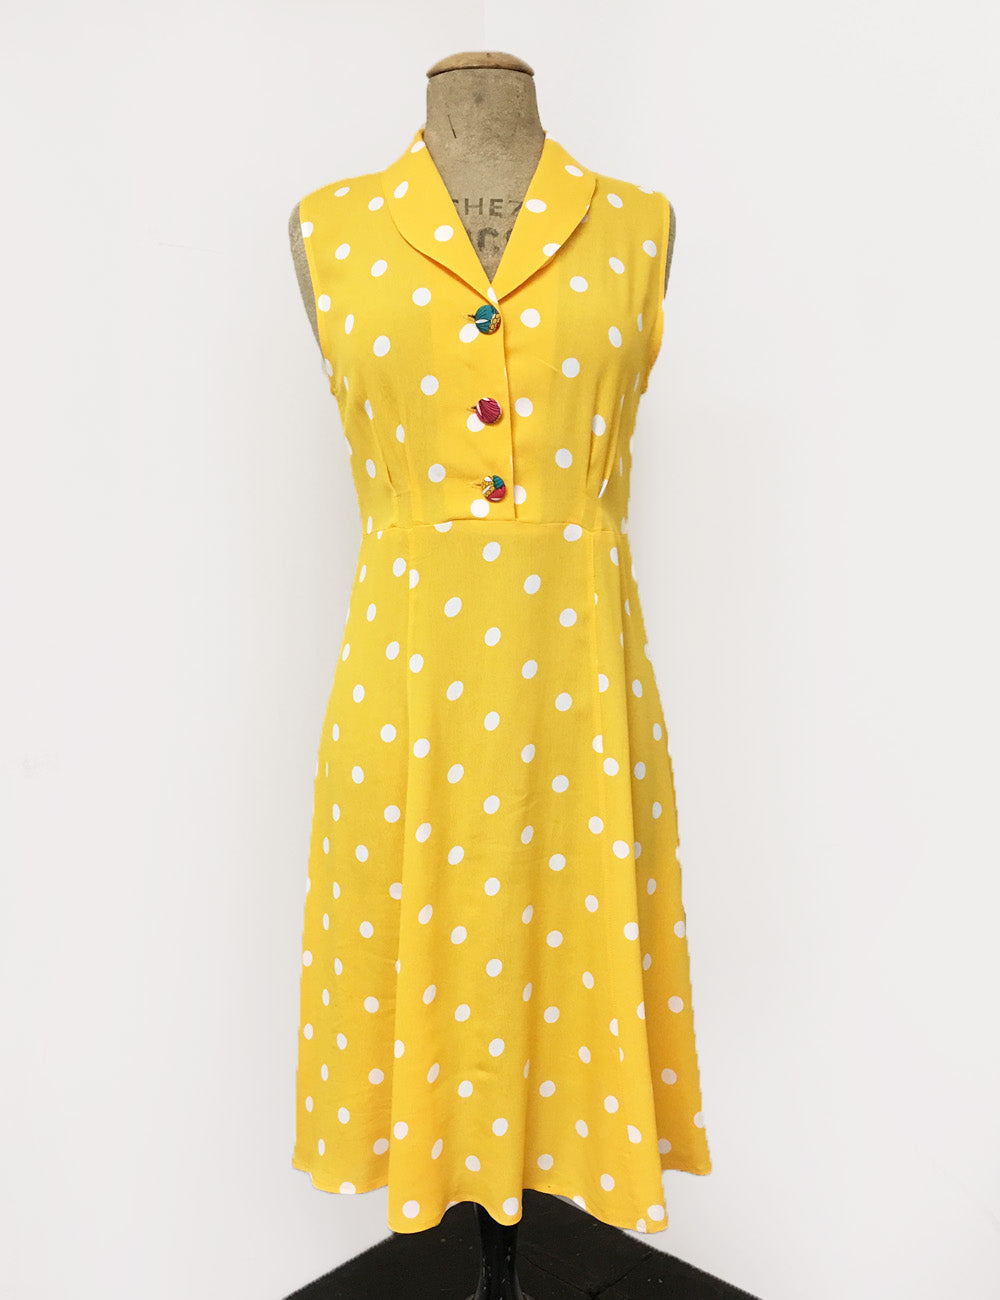 Yellow & White Polka Dot Sleeveless Knee Length Vintage Dress - FINAL SALE